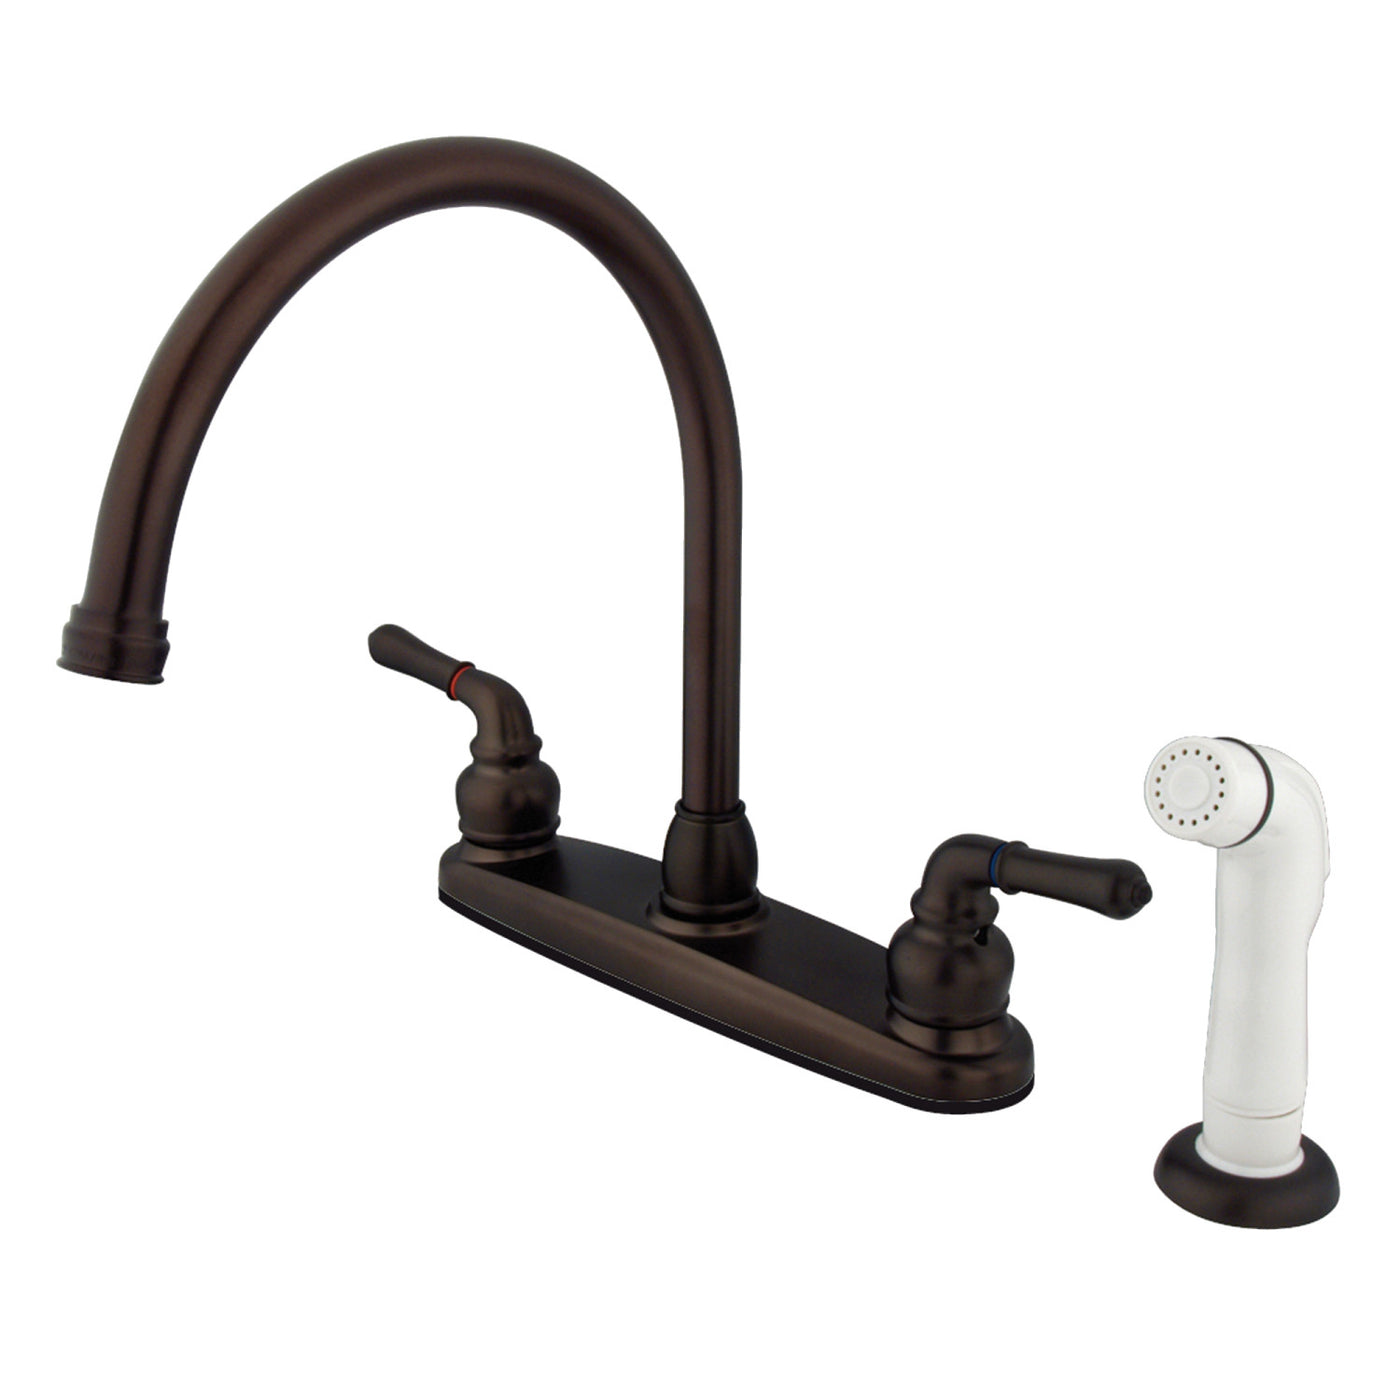 Elements of Design EB795 8-Inch Centerset Kitchen Faucet, Oil Rubbed Bronze